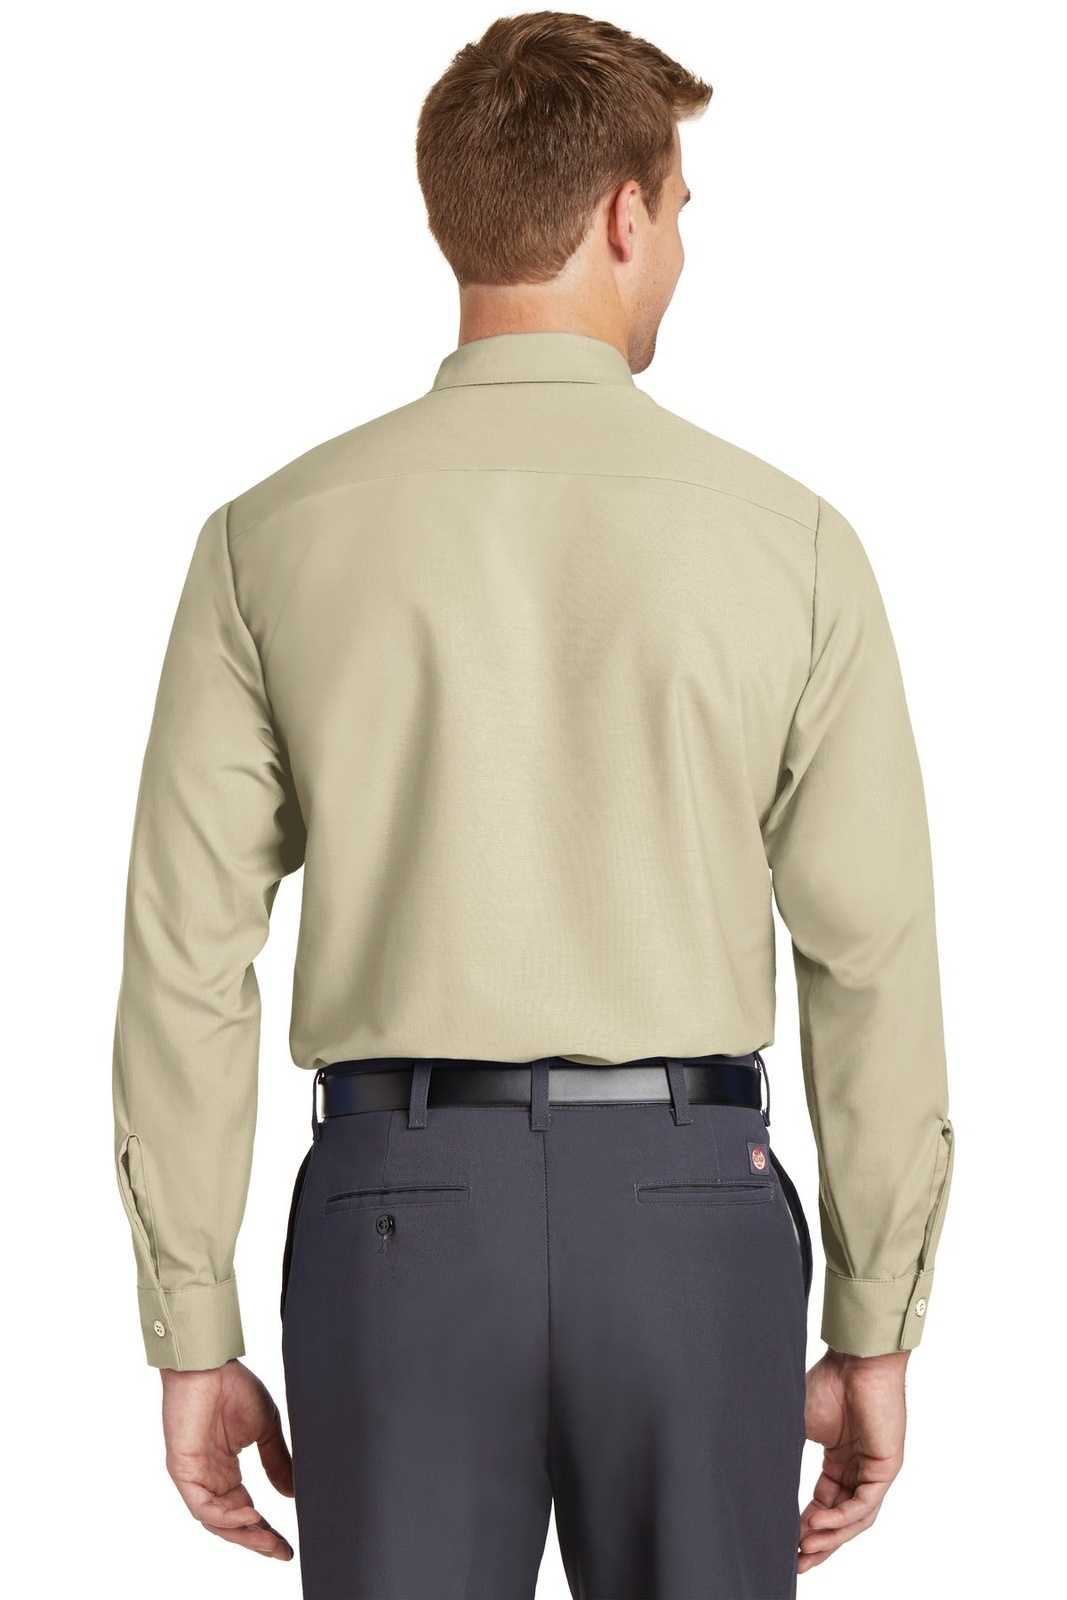 Red Kap SP14 Long Sleeve Industrial Work Shirt - Light Tan - HIT a Double - 1